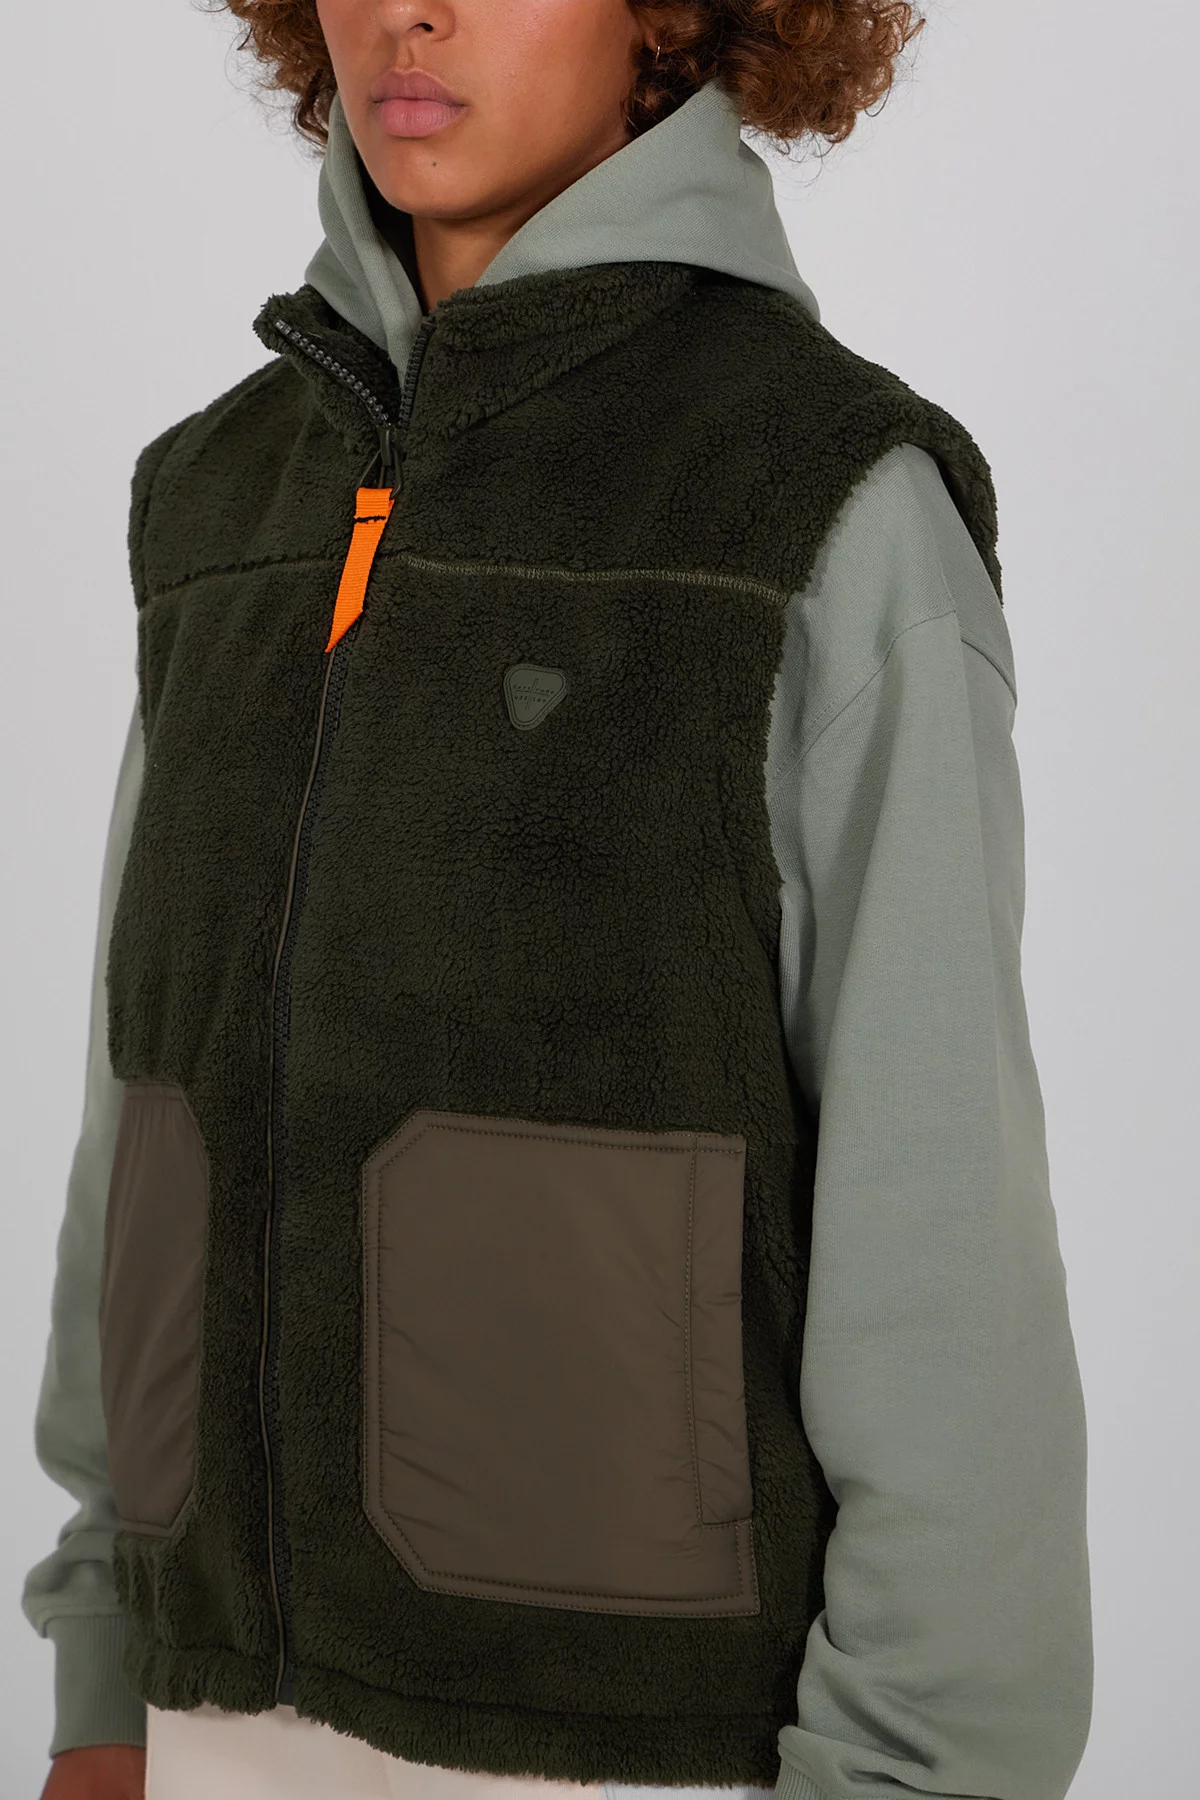 Bakary Light two-component sleeveless jacket